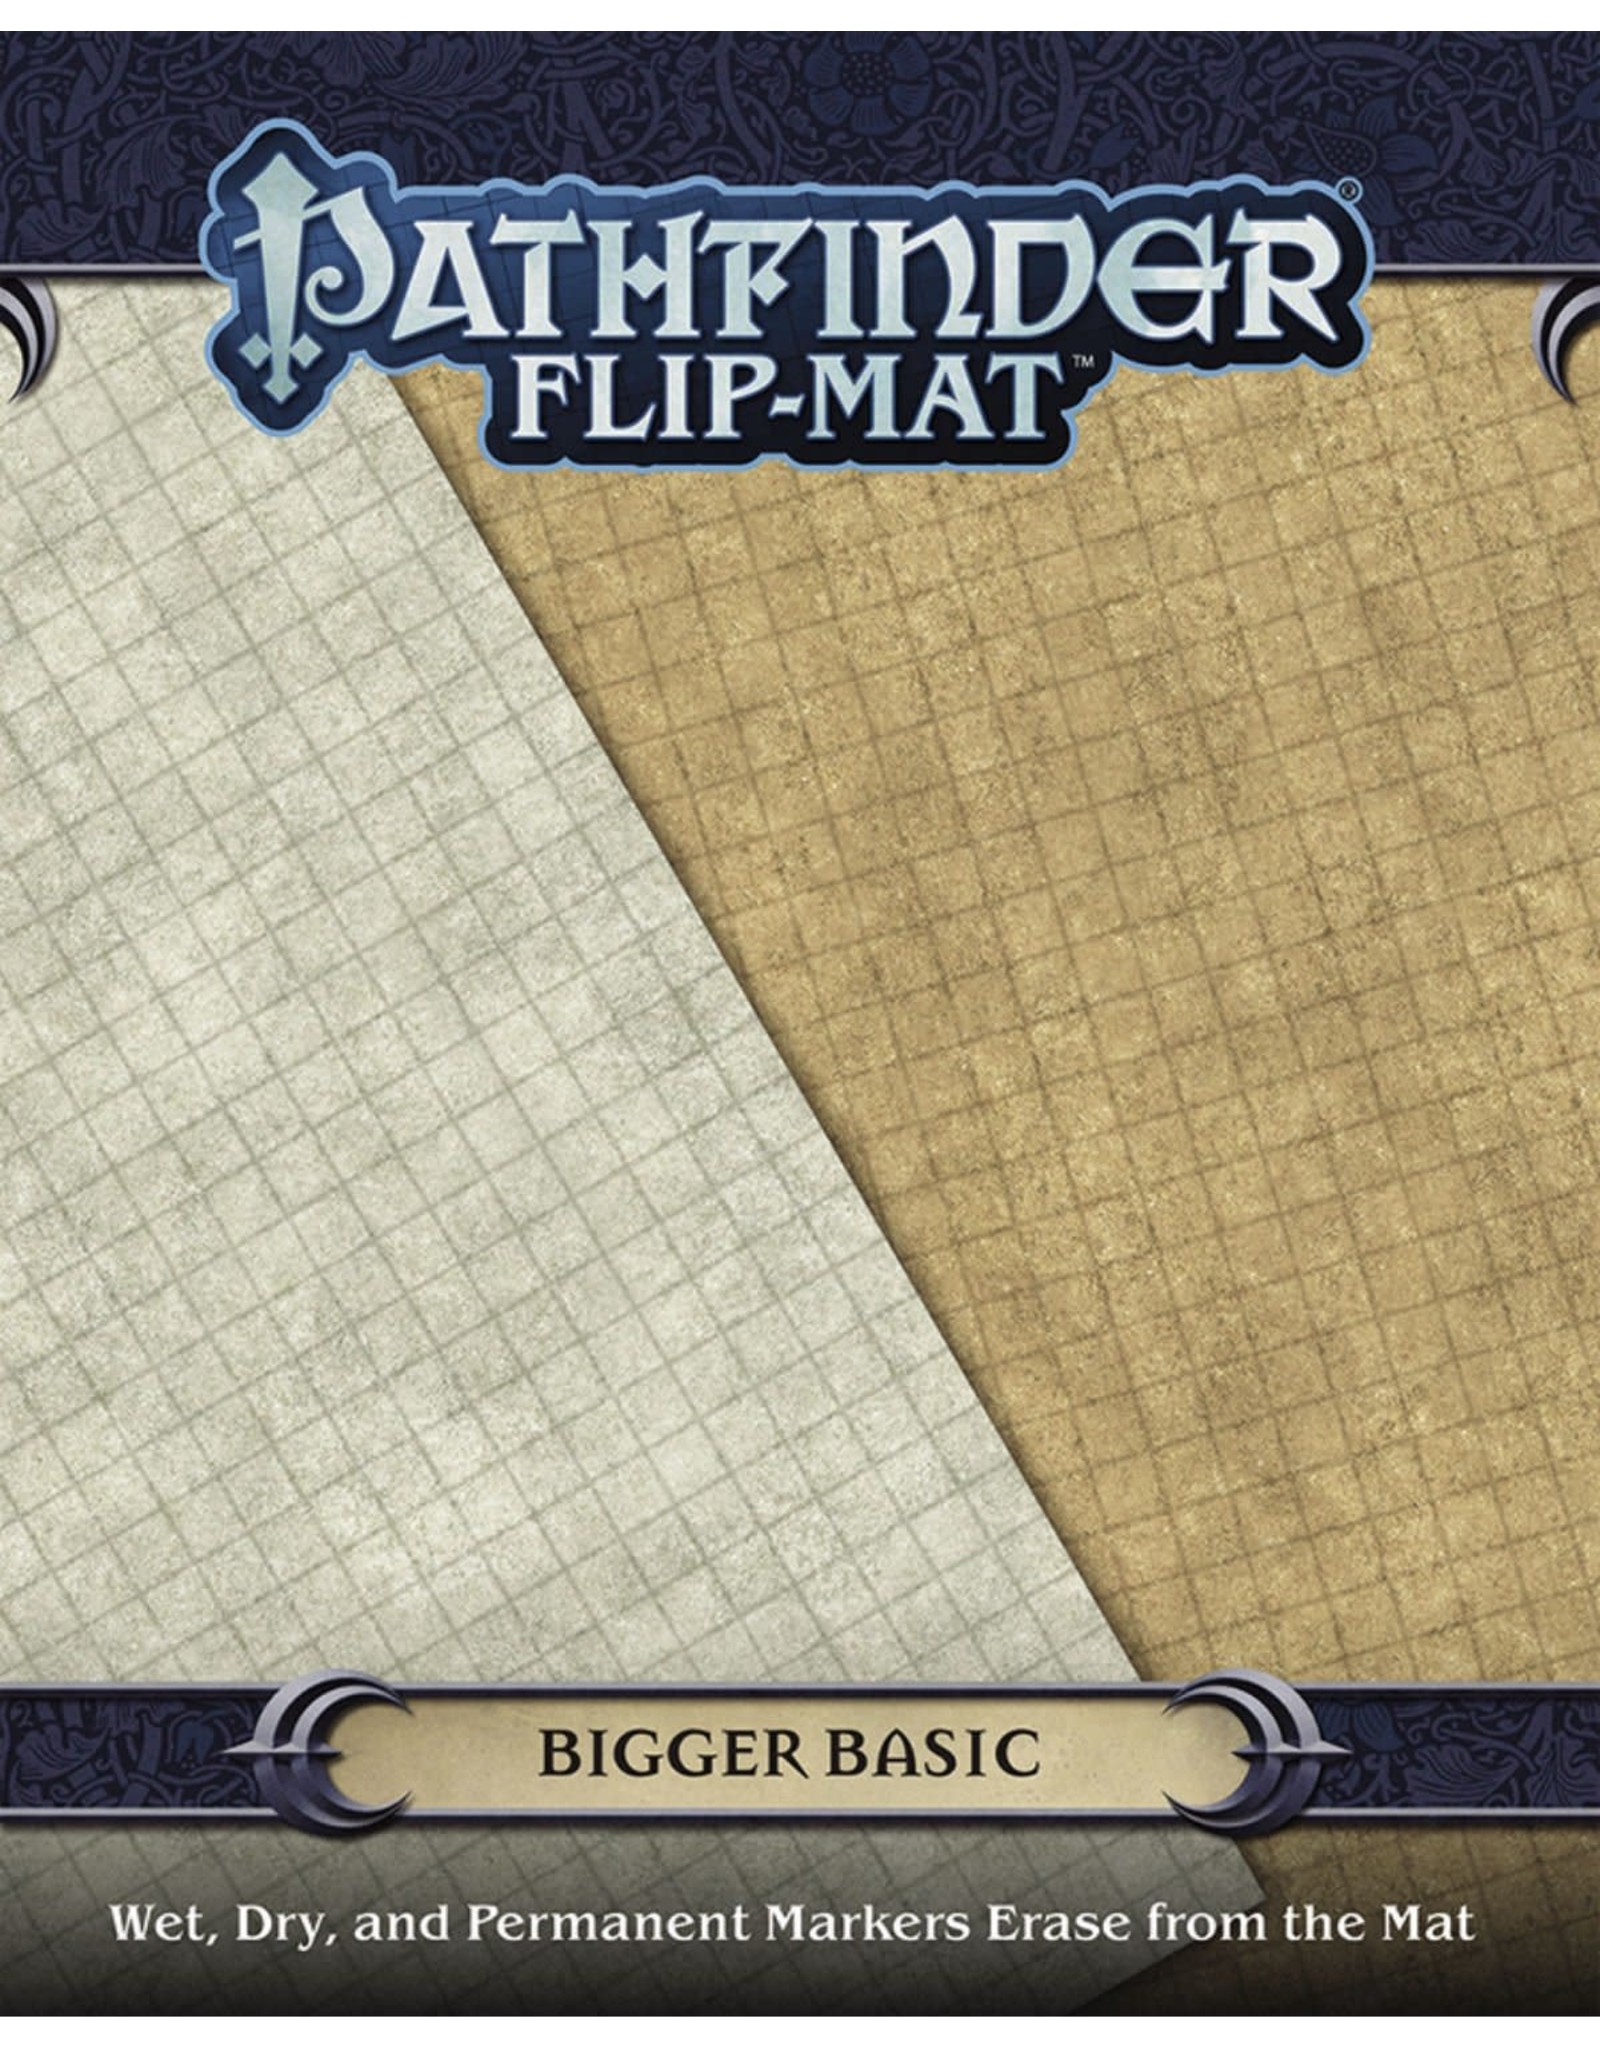 Pathfinder Pathfinder Flip-Mat Bigger Basic